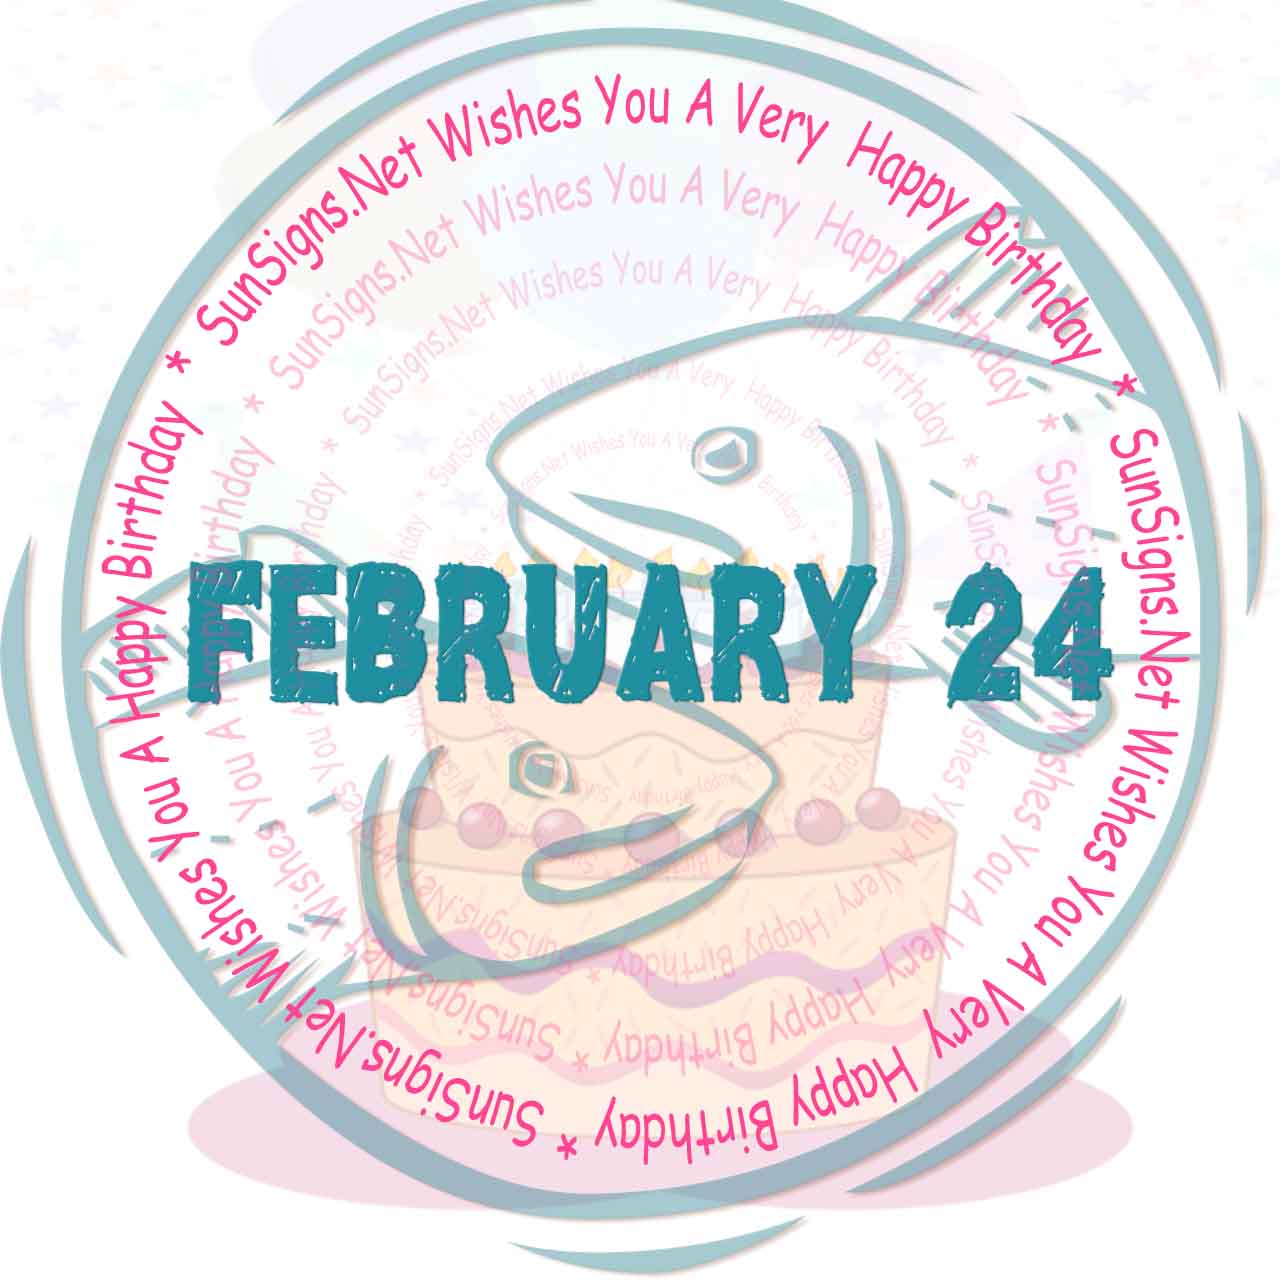 February 24 Zodiac Is Pisces, Birthdays And Horoscope